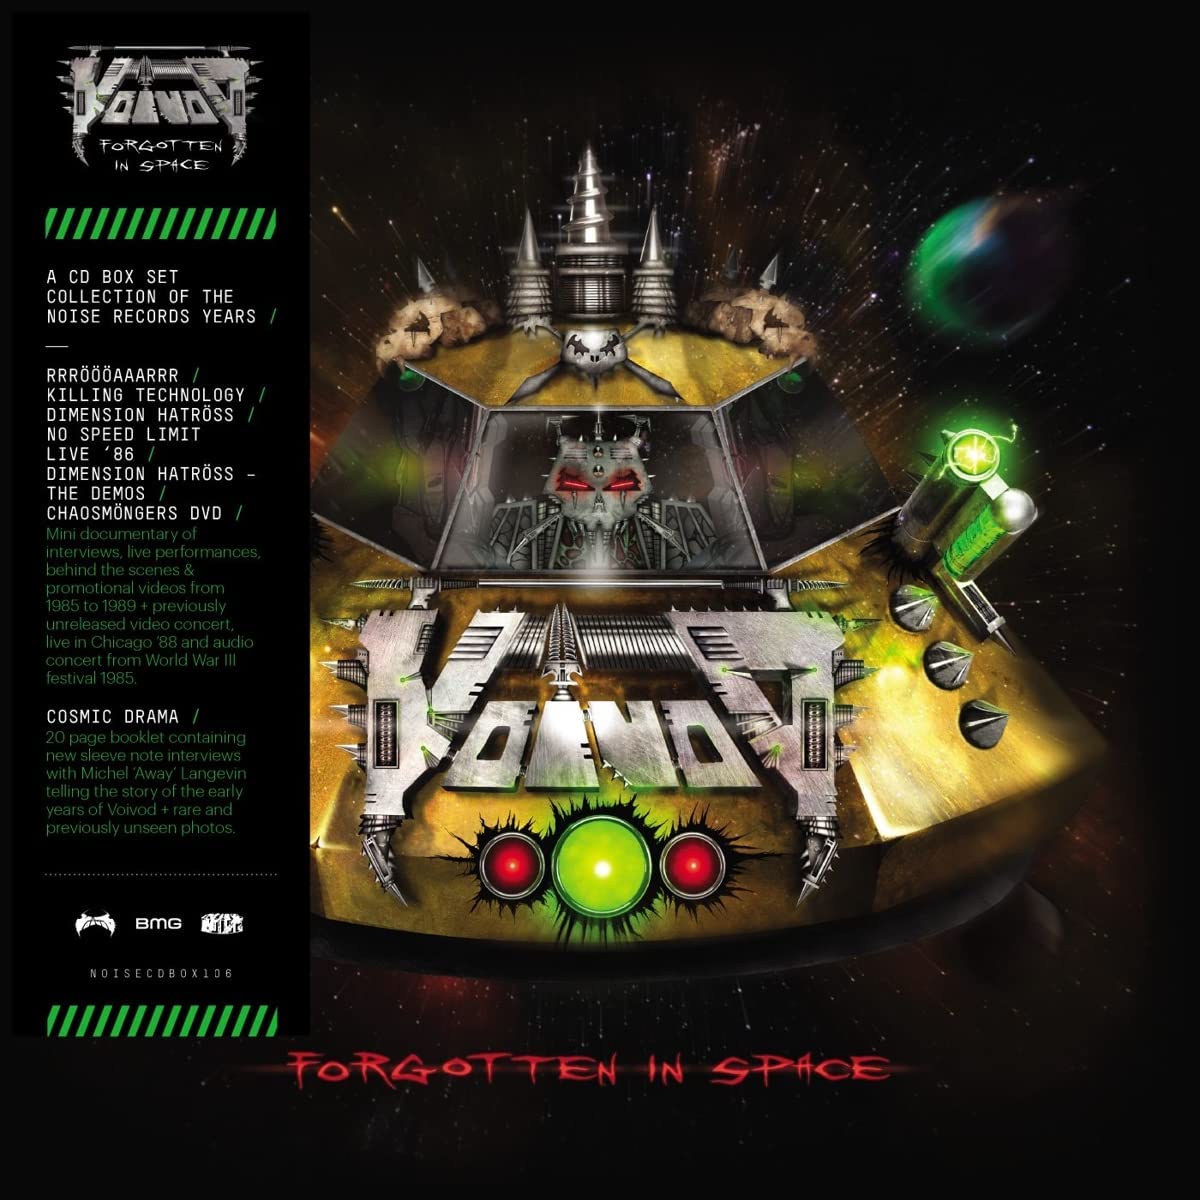 Voivod "Forgotten In Space" 5CD/DVD Box Set